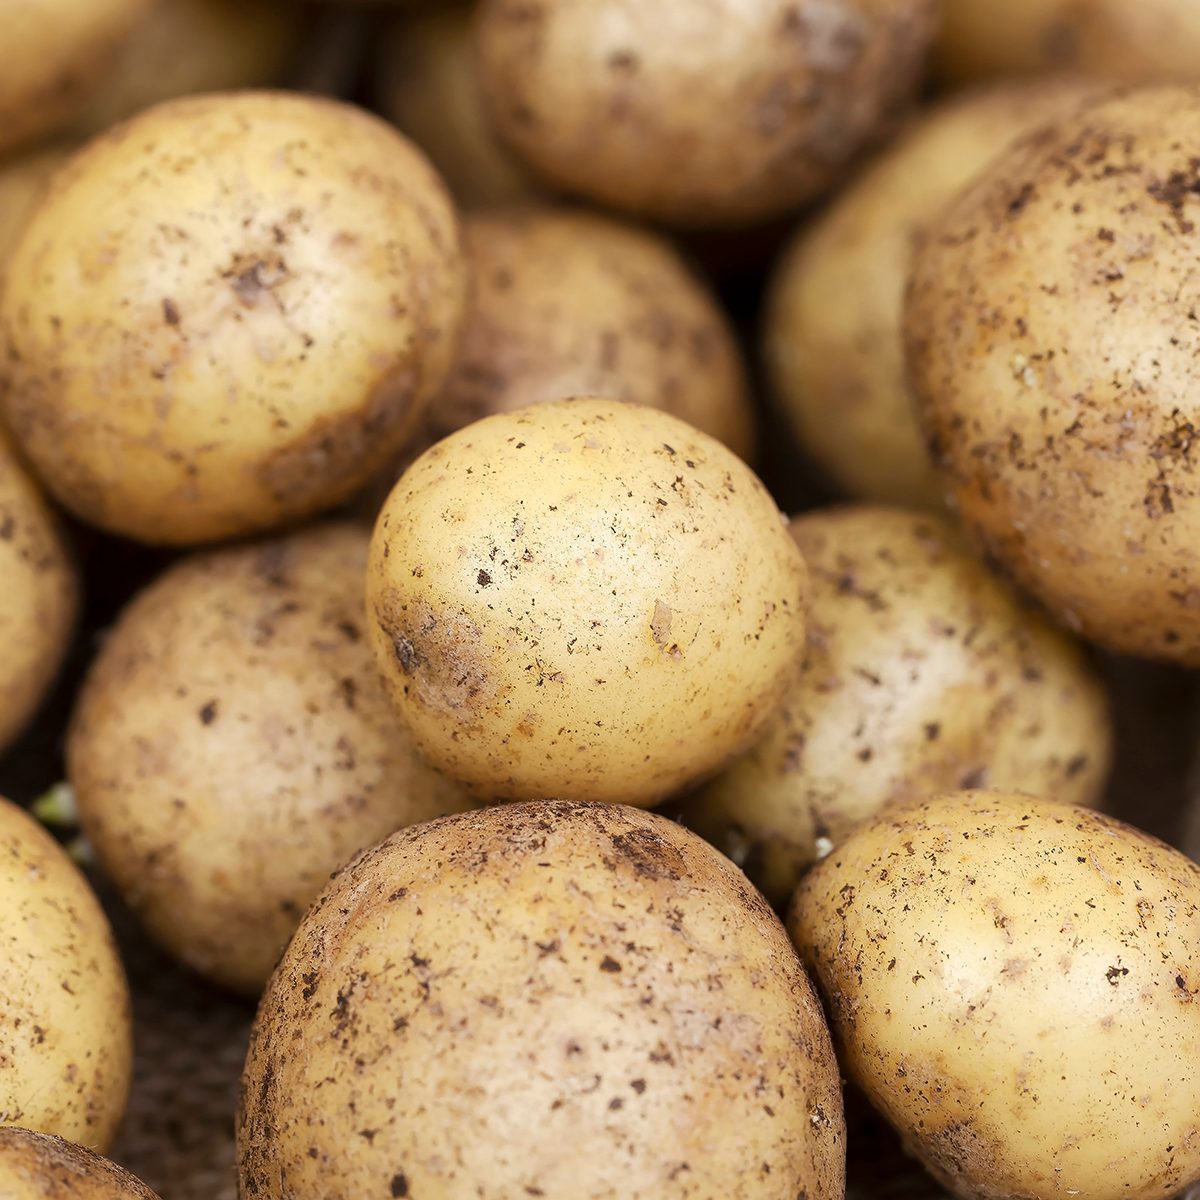 Bunch of potatoes